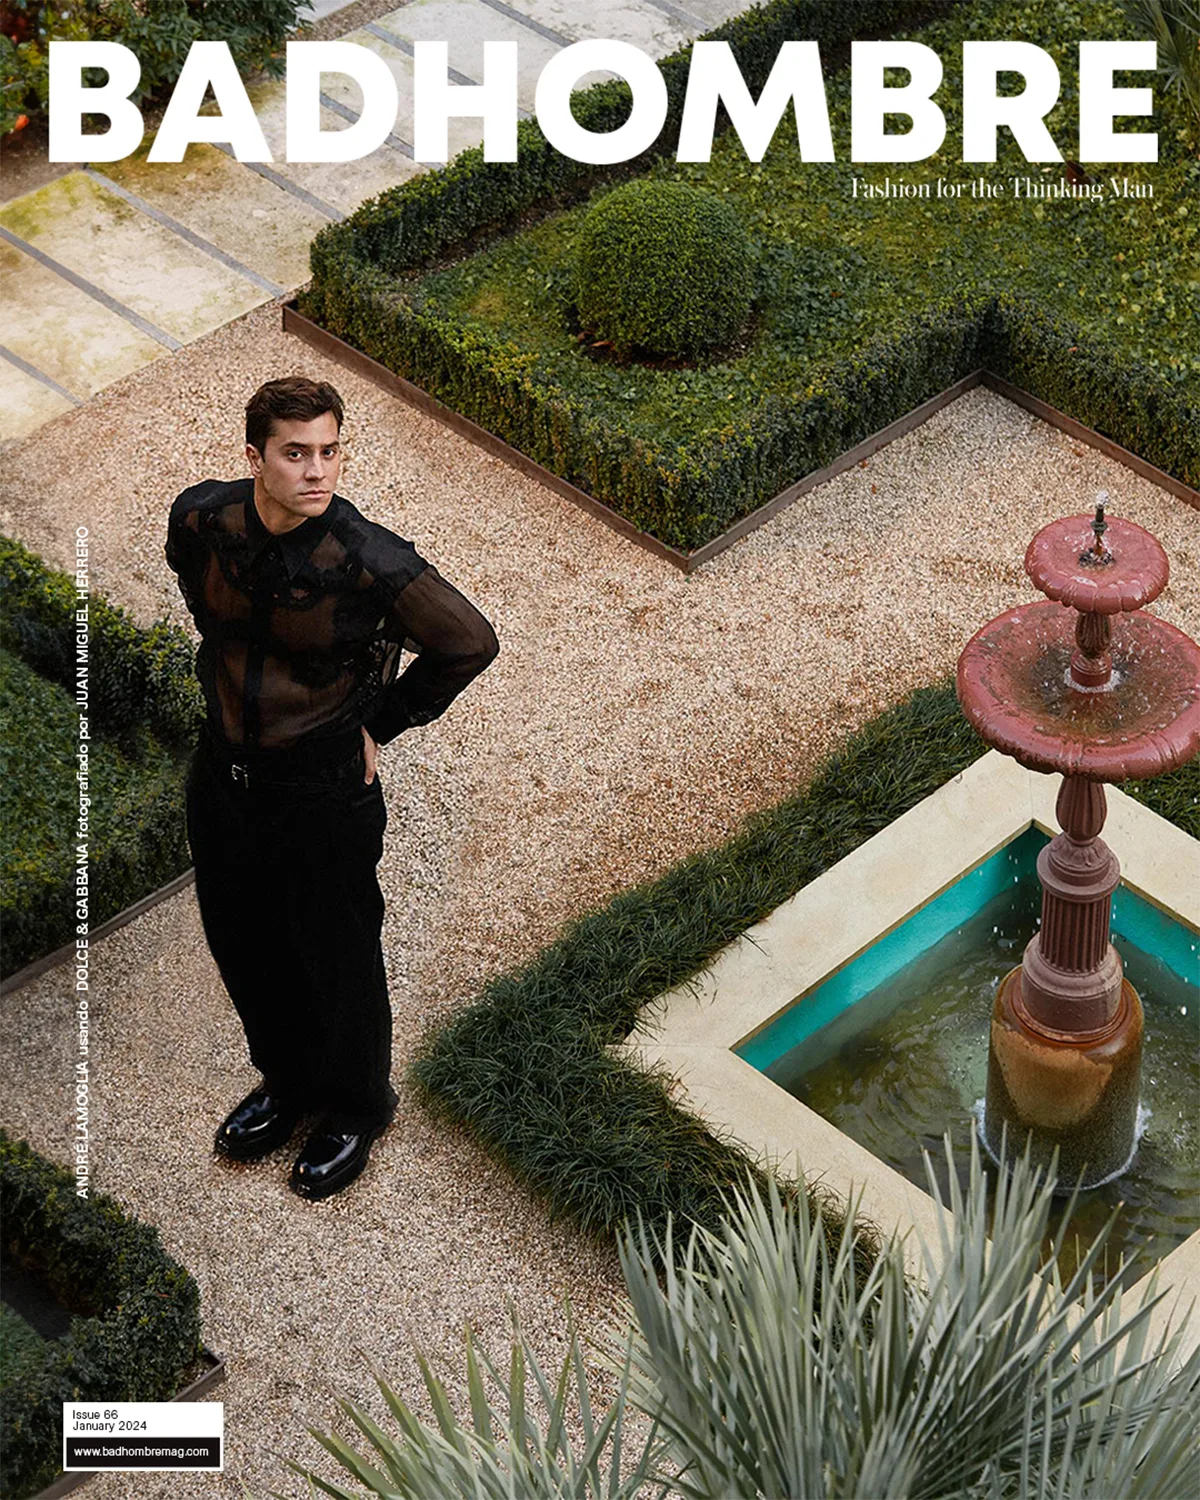 Internacional: André Lamoglia, de "Elite", é capa da revista no México